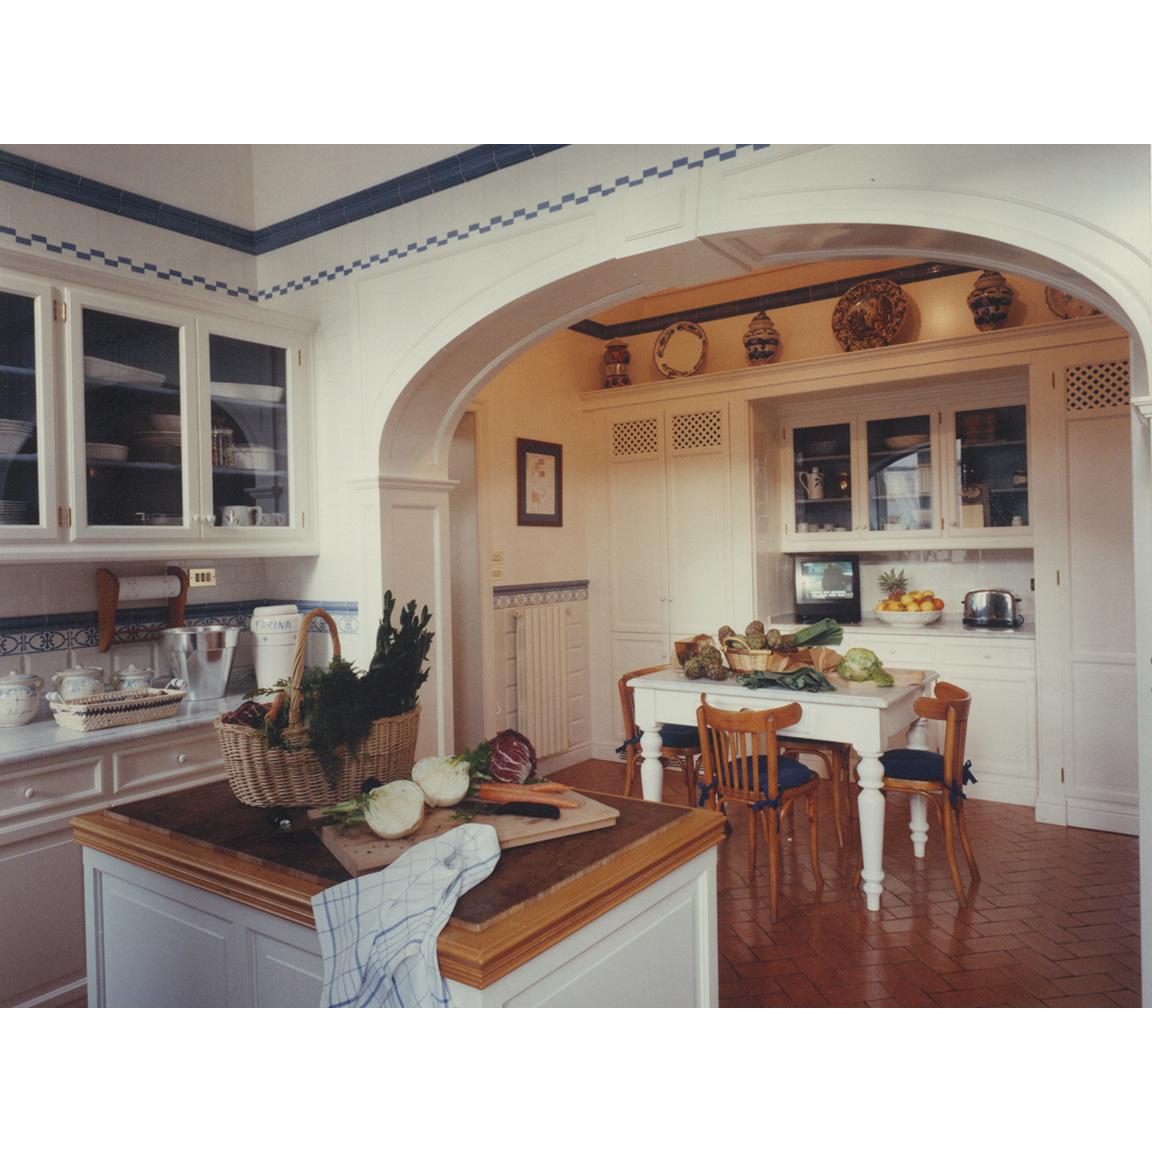 white kitchen with cotto floor